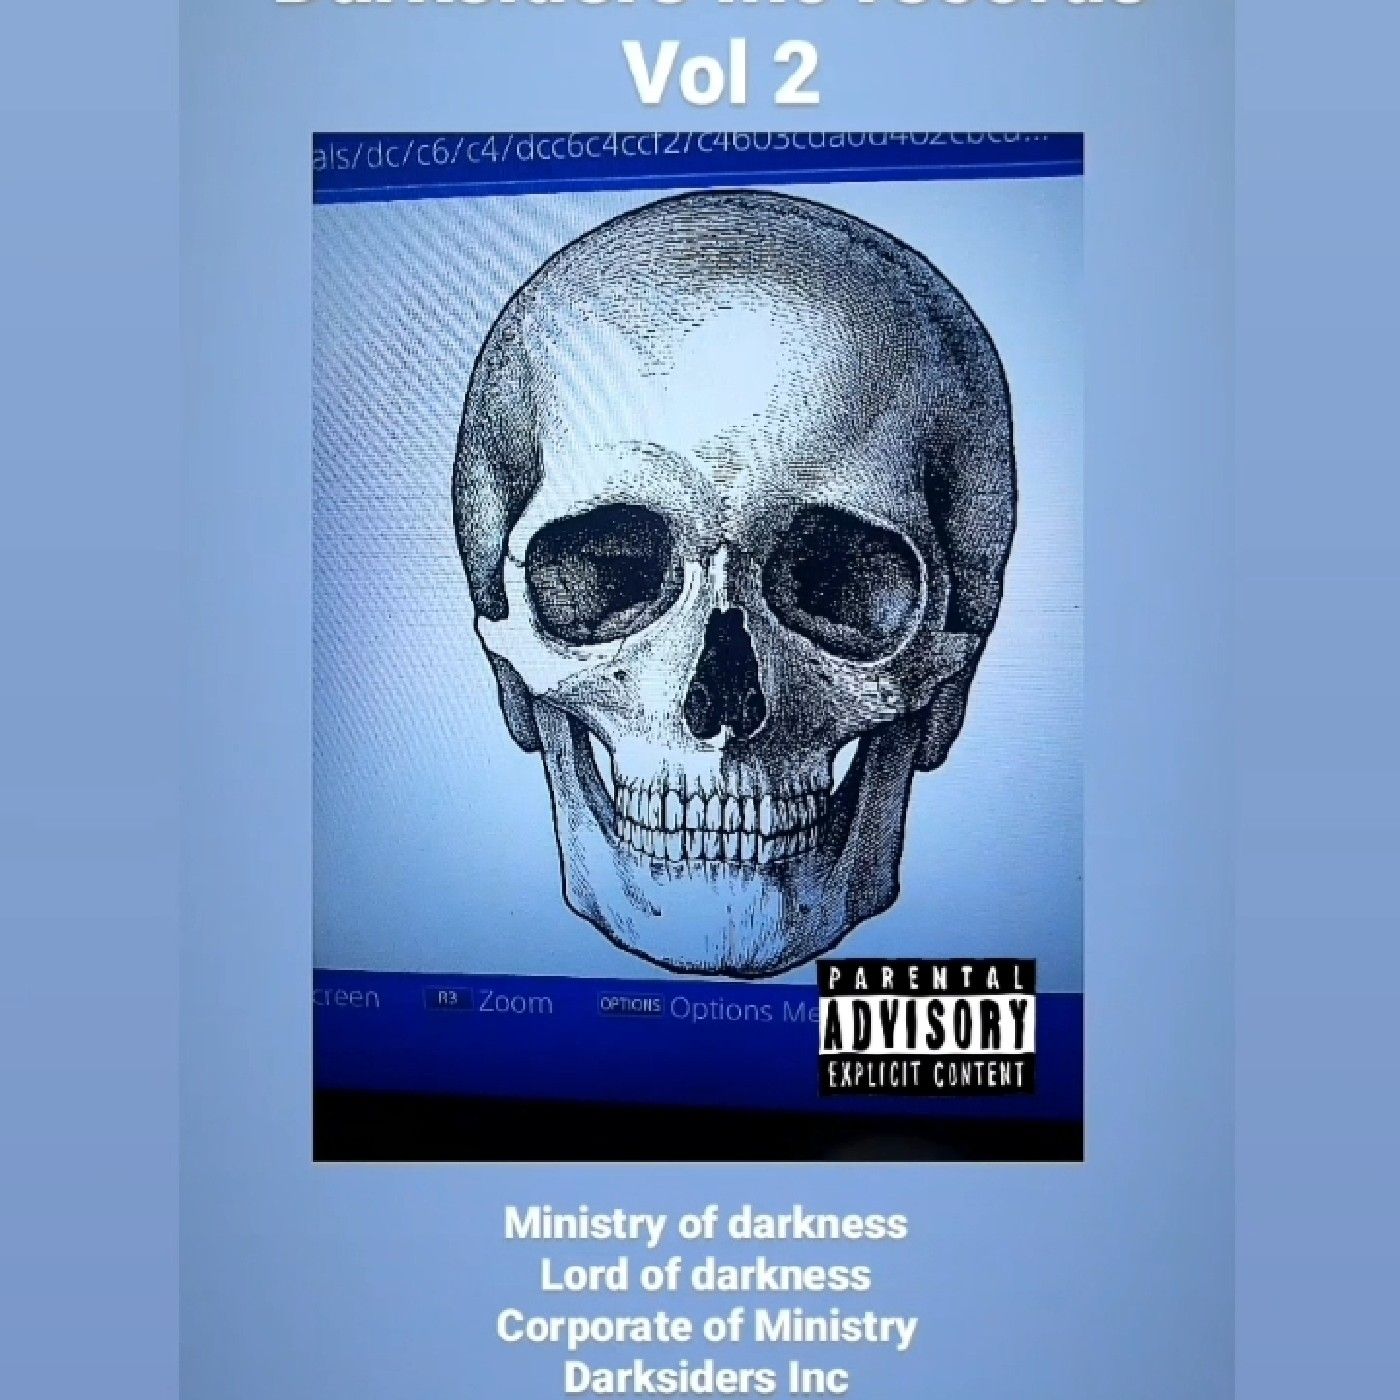 Darksiders Inc Records Vol 2